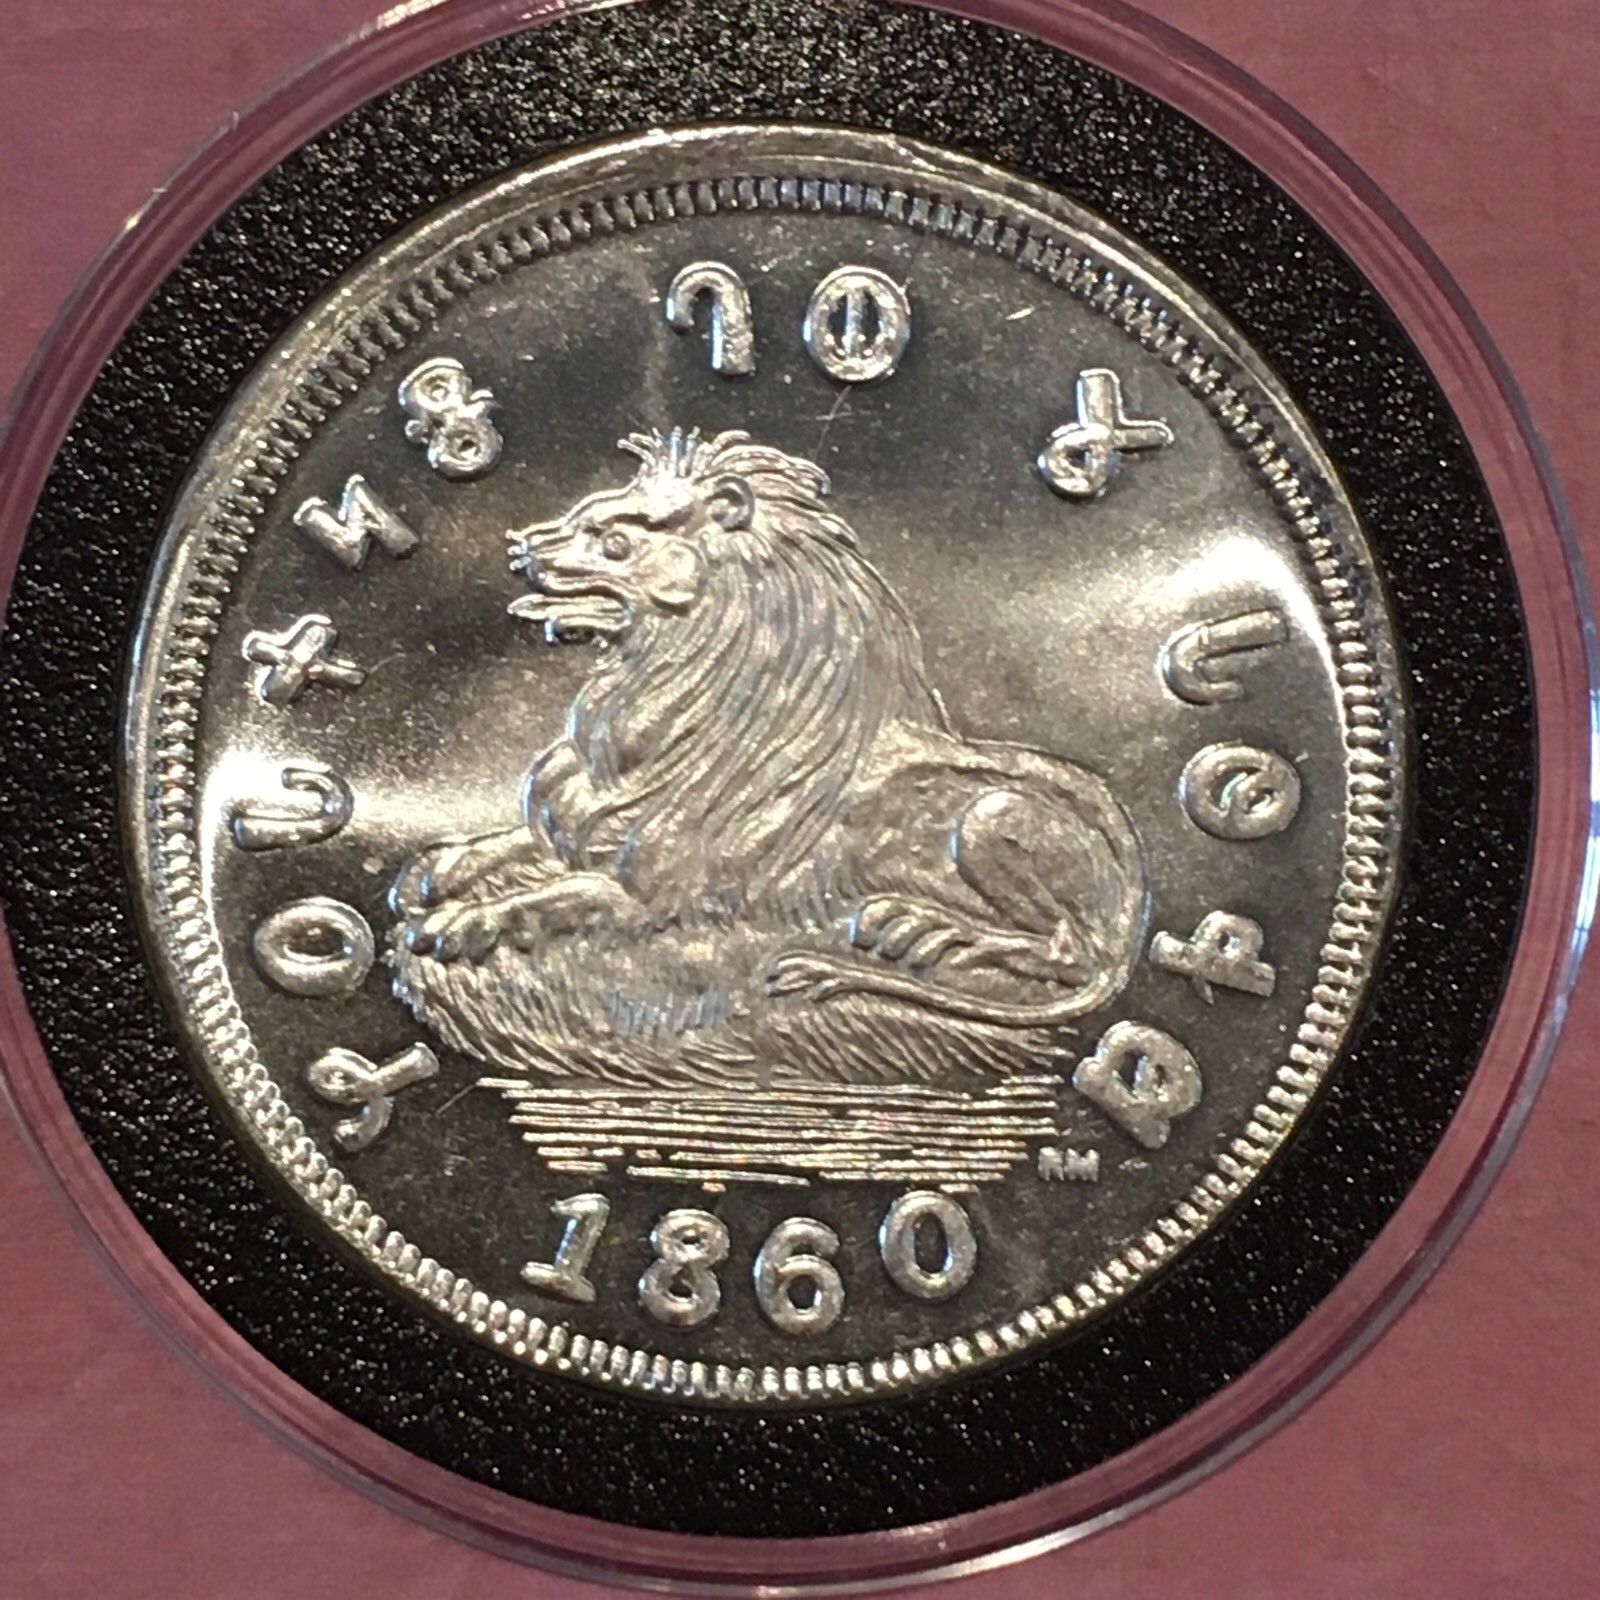 Mormon Religion Rare Rust Coin Lion 1 Troy Oz .999 Fine Silver Round Collectible